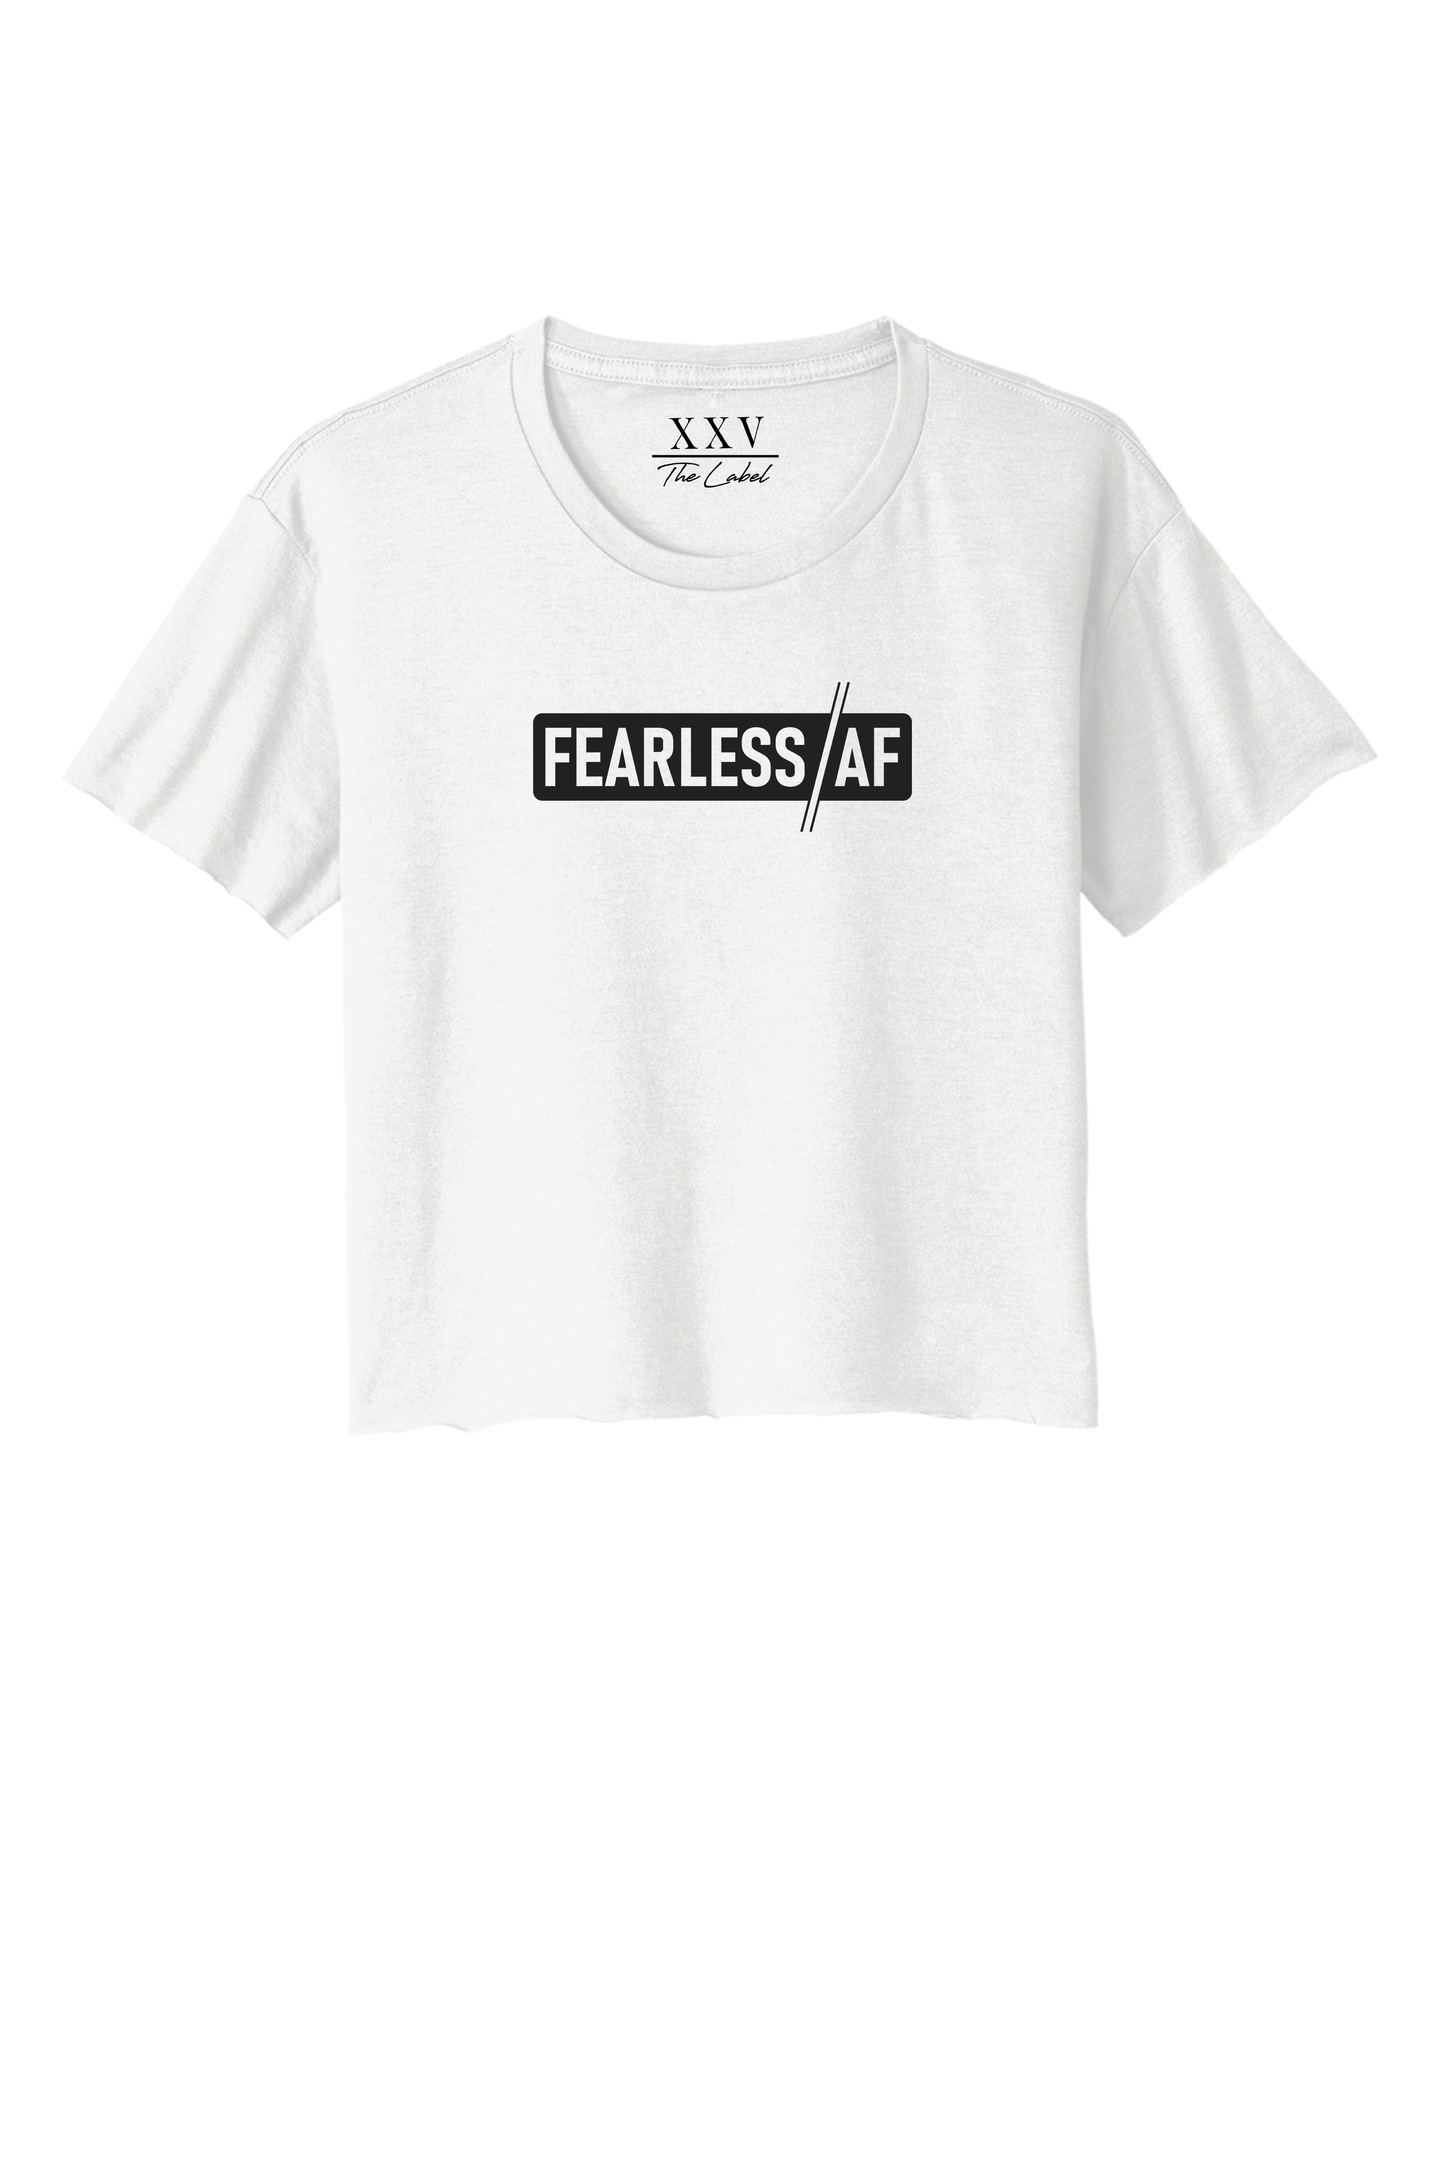 FearlessAF